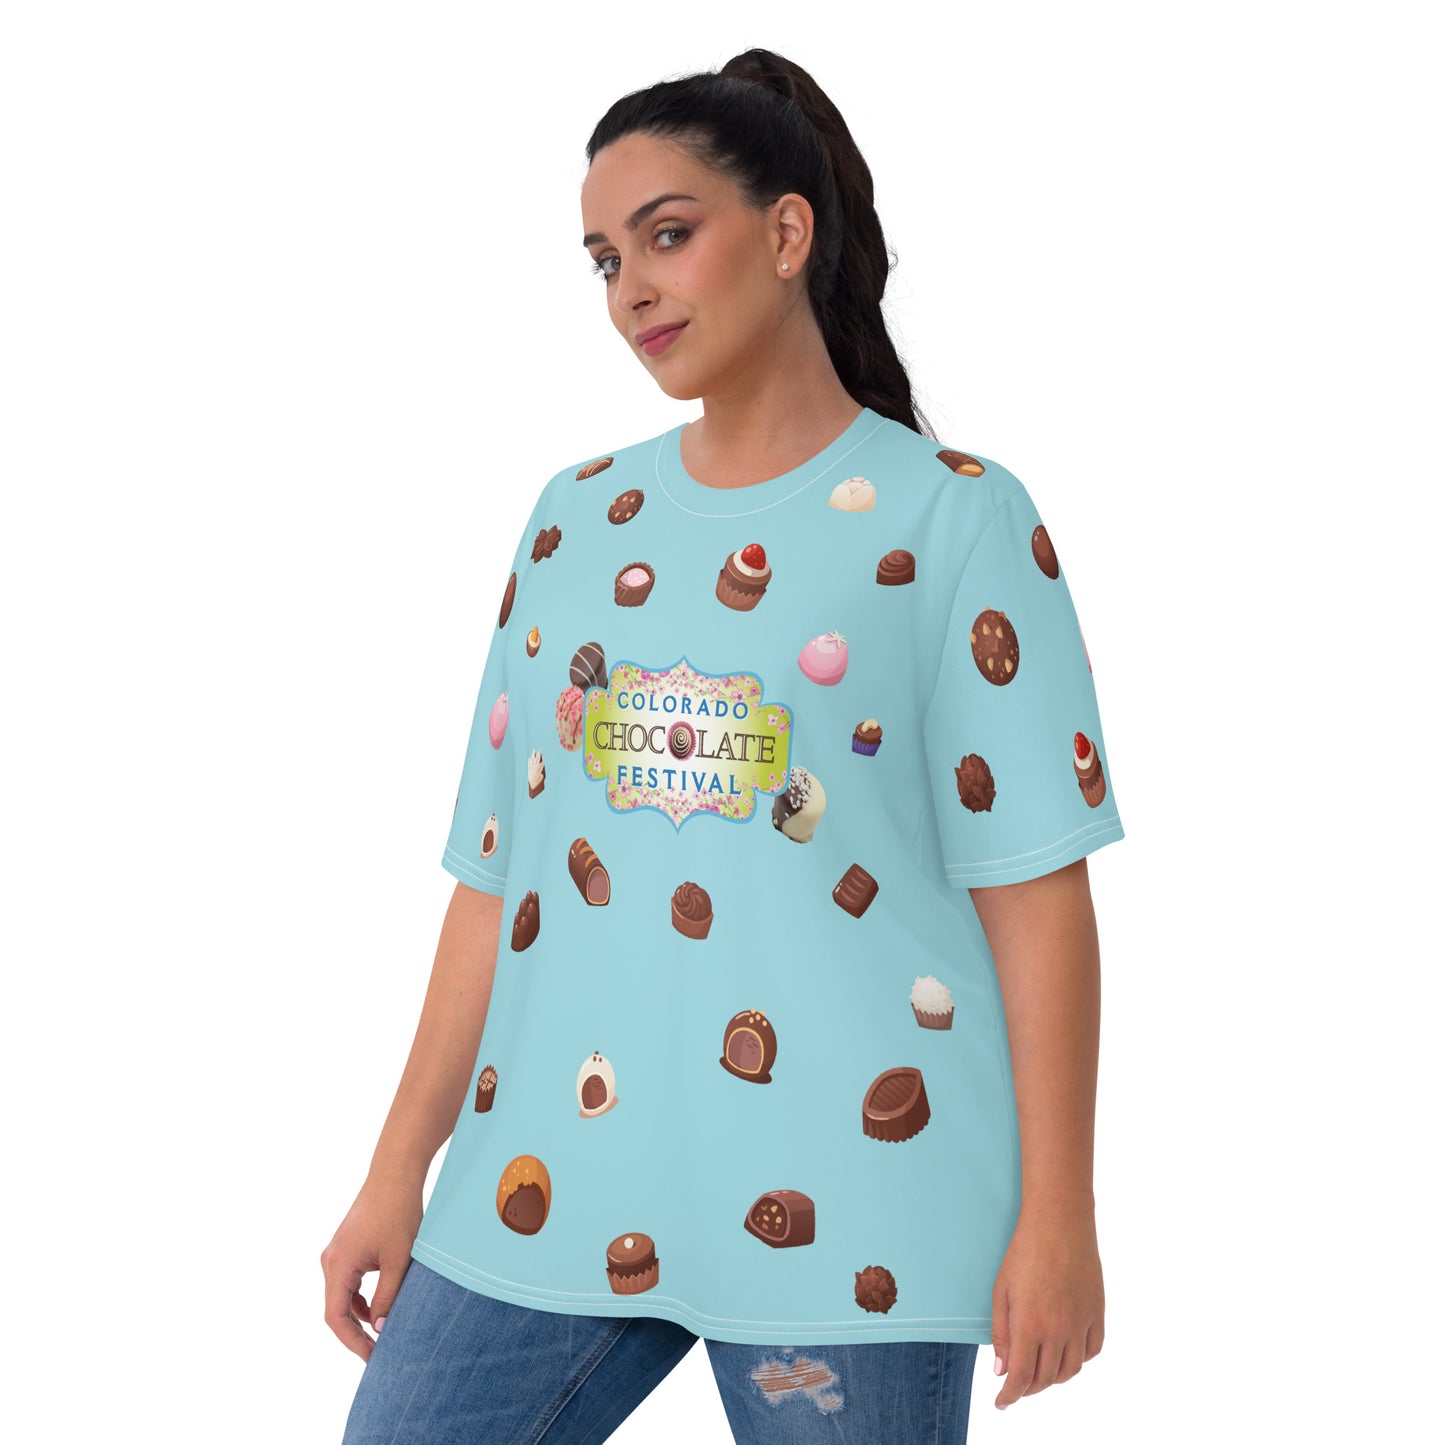 Chocolate Festival Truffles Women's T-shirt